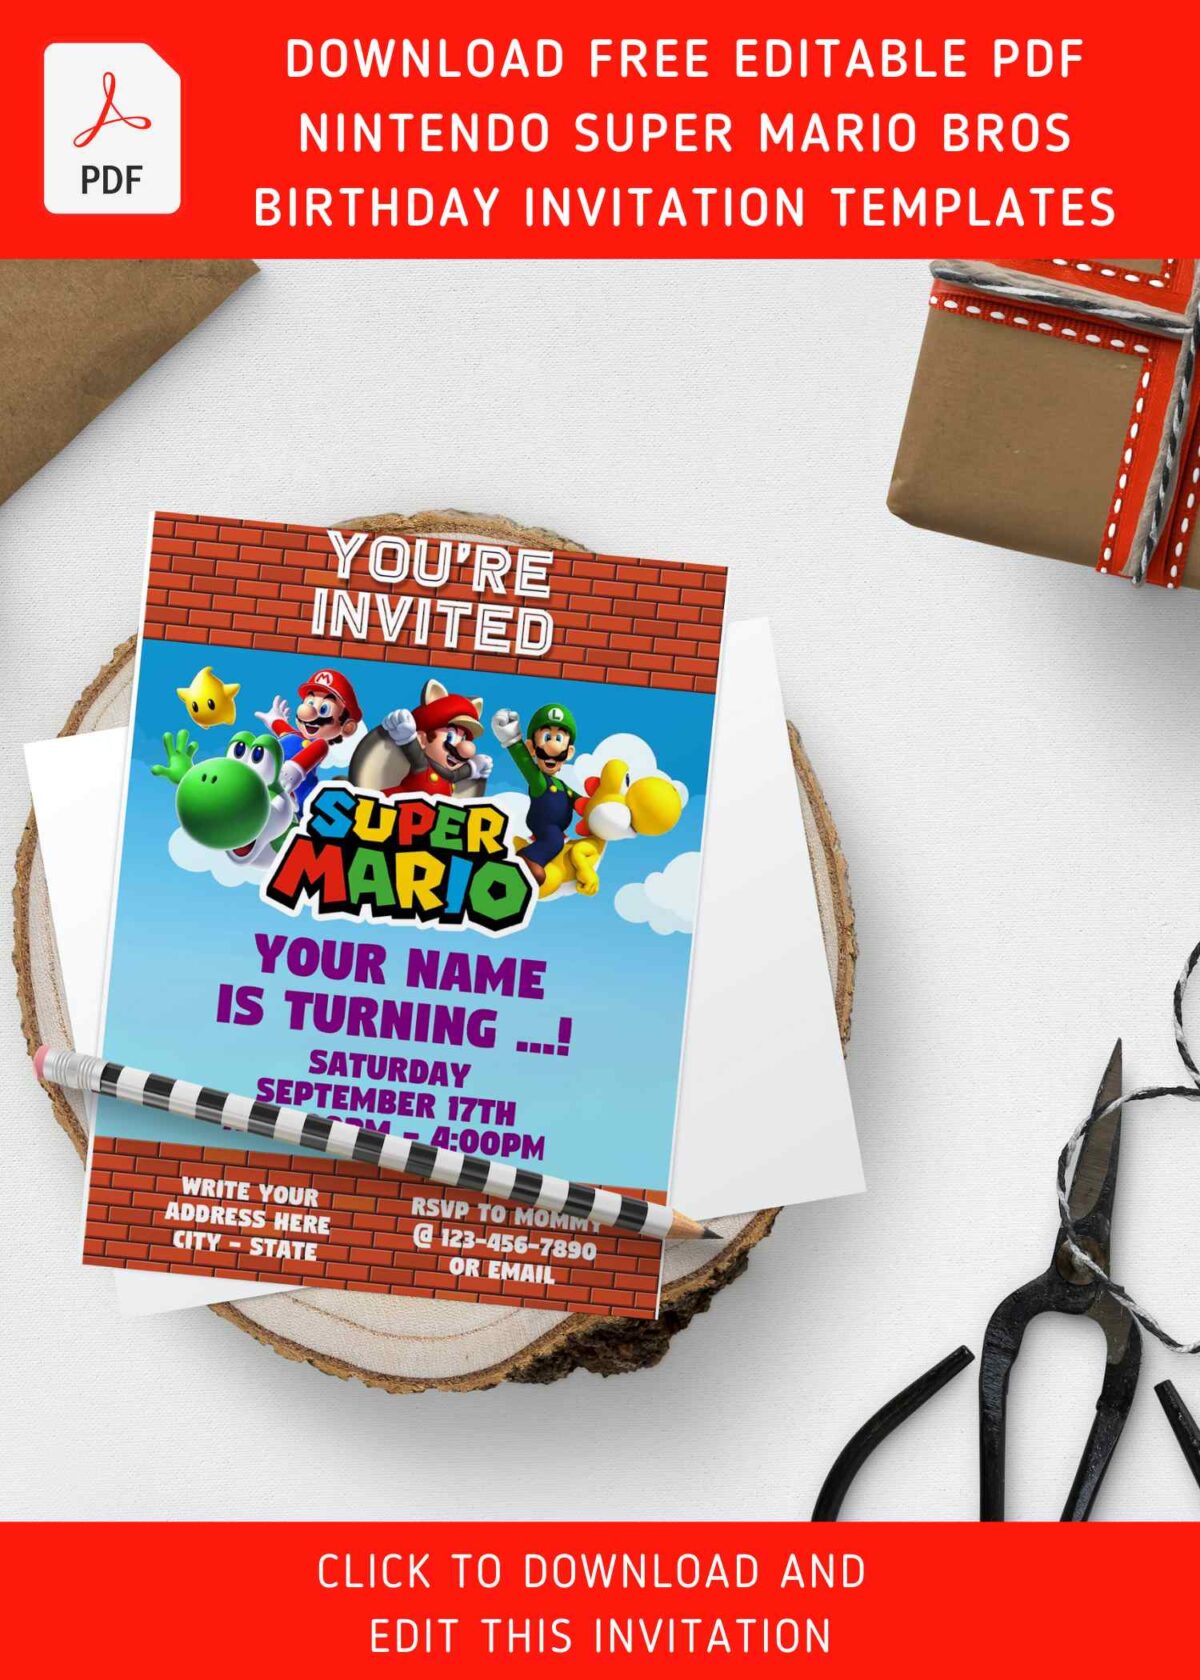 (Free Editable PDF) Super Mario Bros Sunshine Birthday Invitation Templates with Luigi